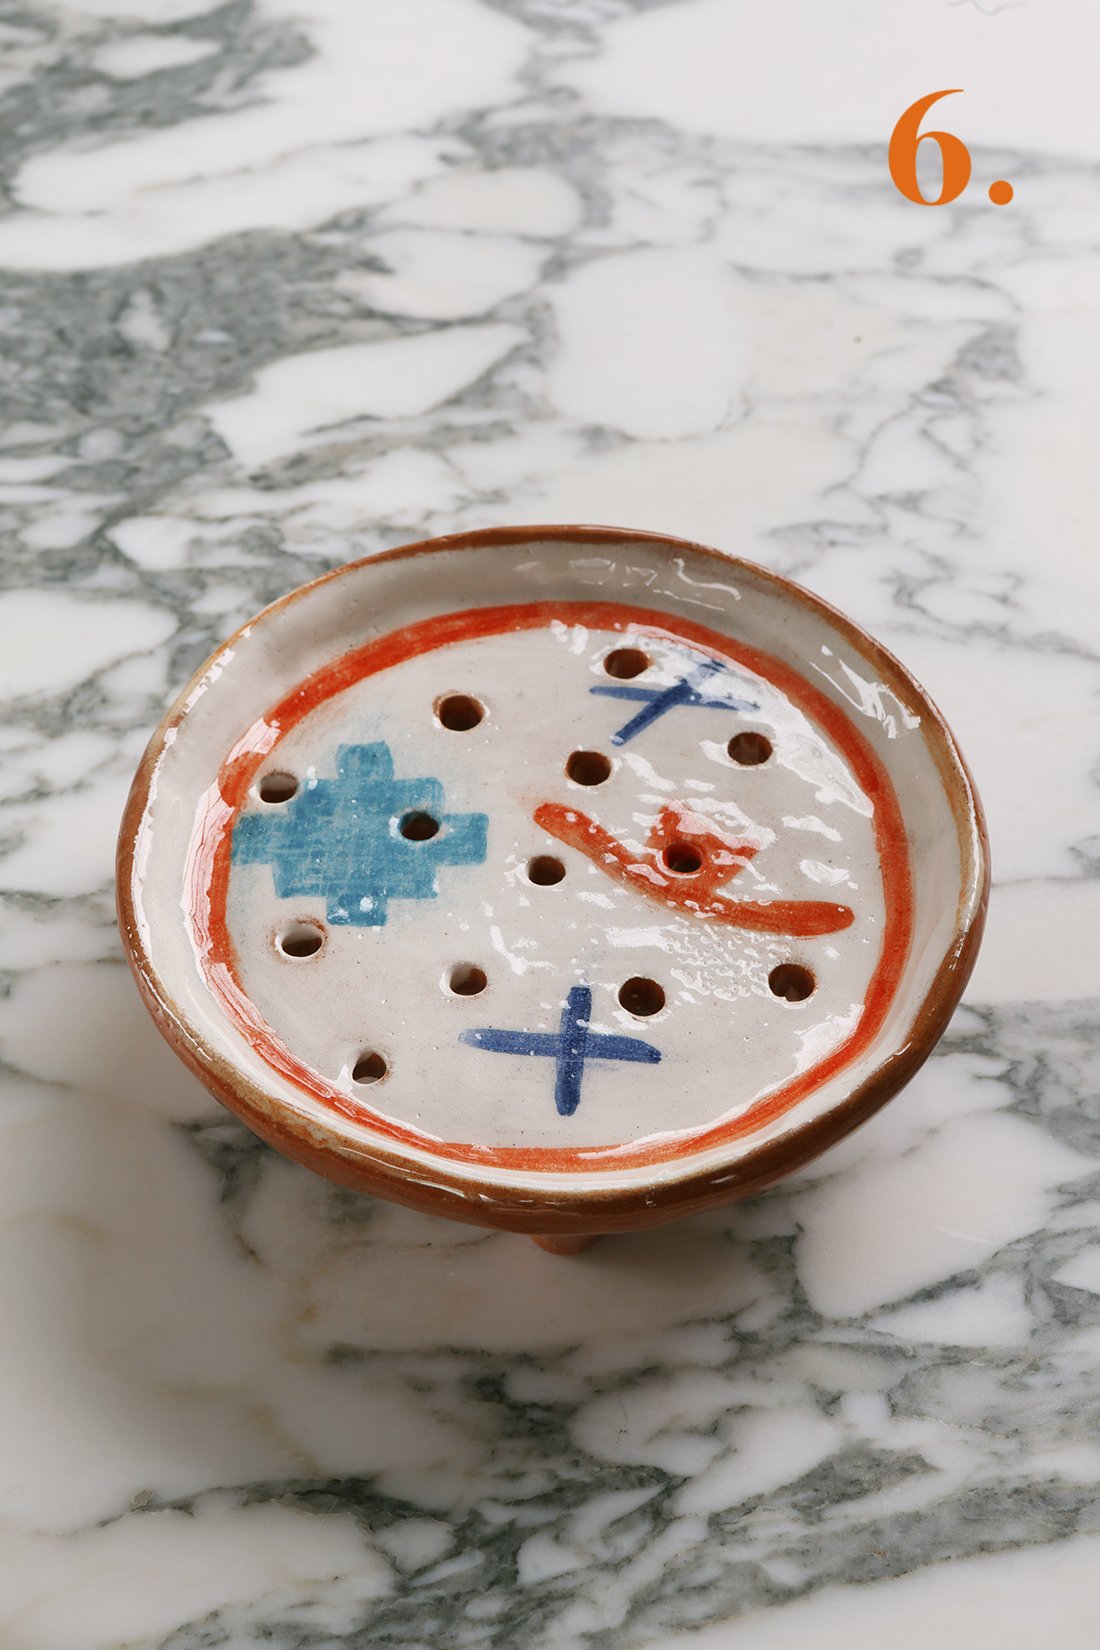 HÁM Ceramic Soap Dishes